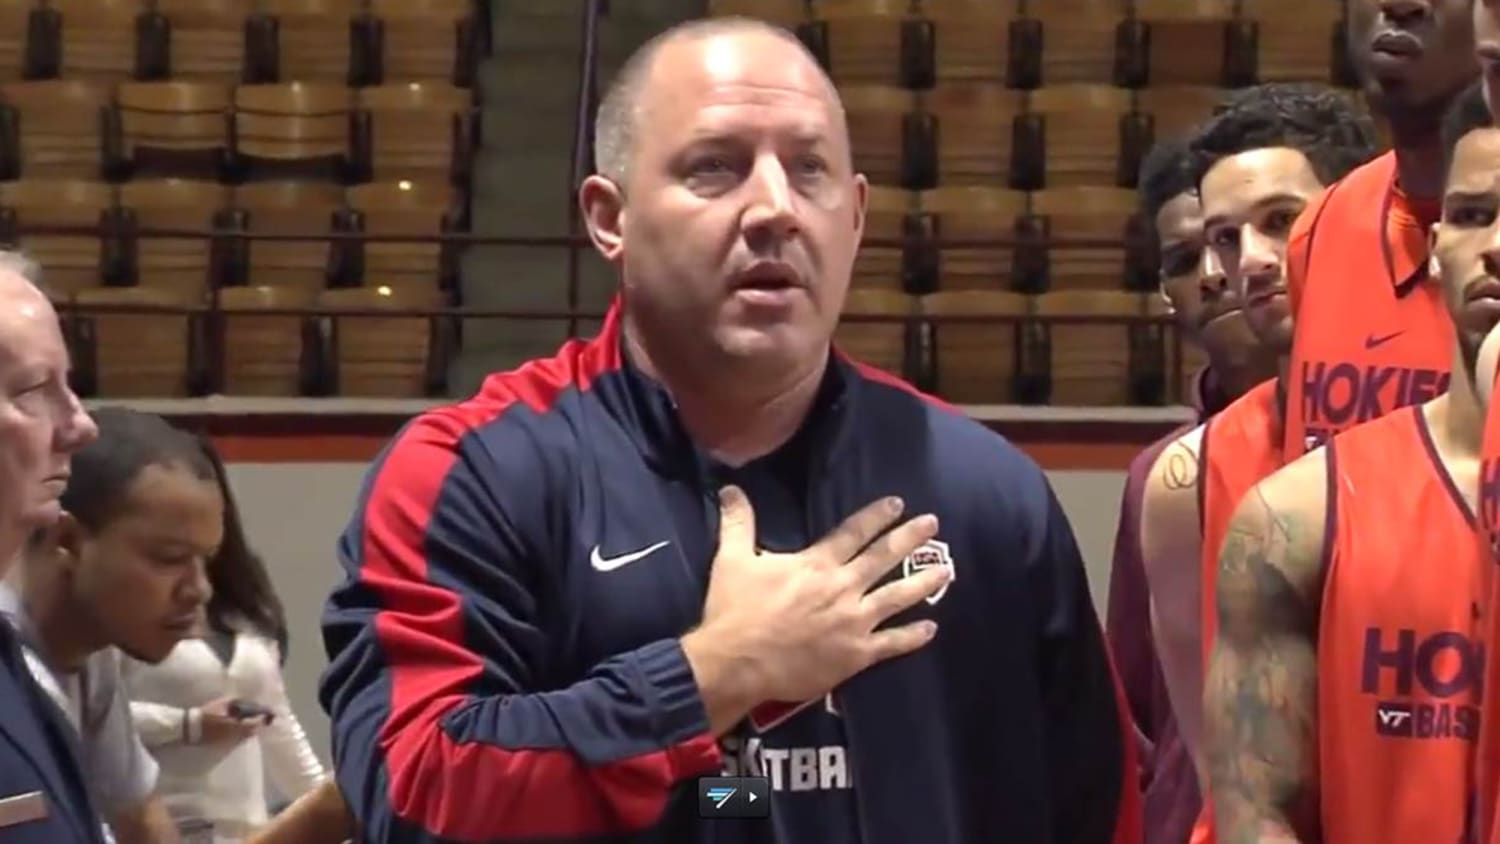 Virginia Tech coach bring veterans to teach team respect for national anthem